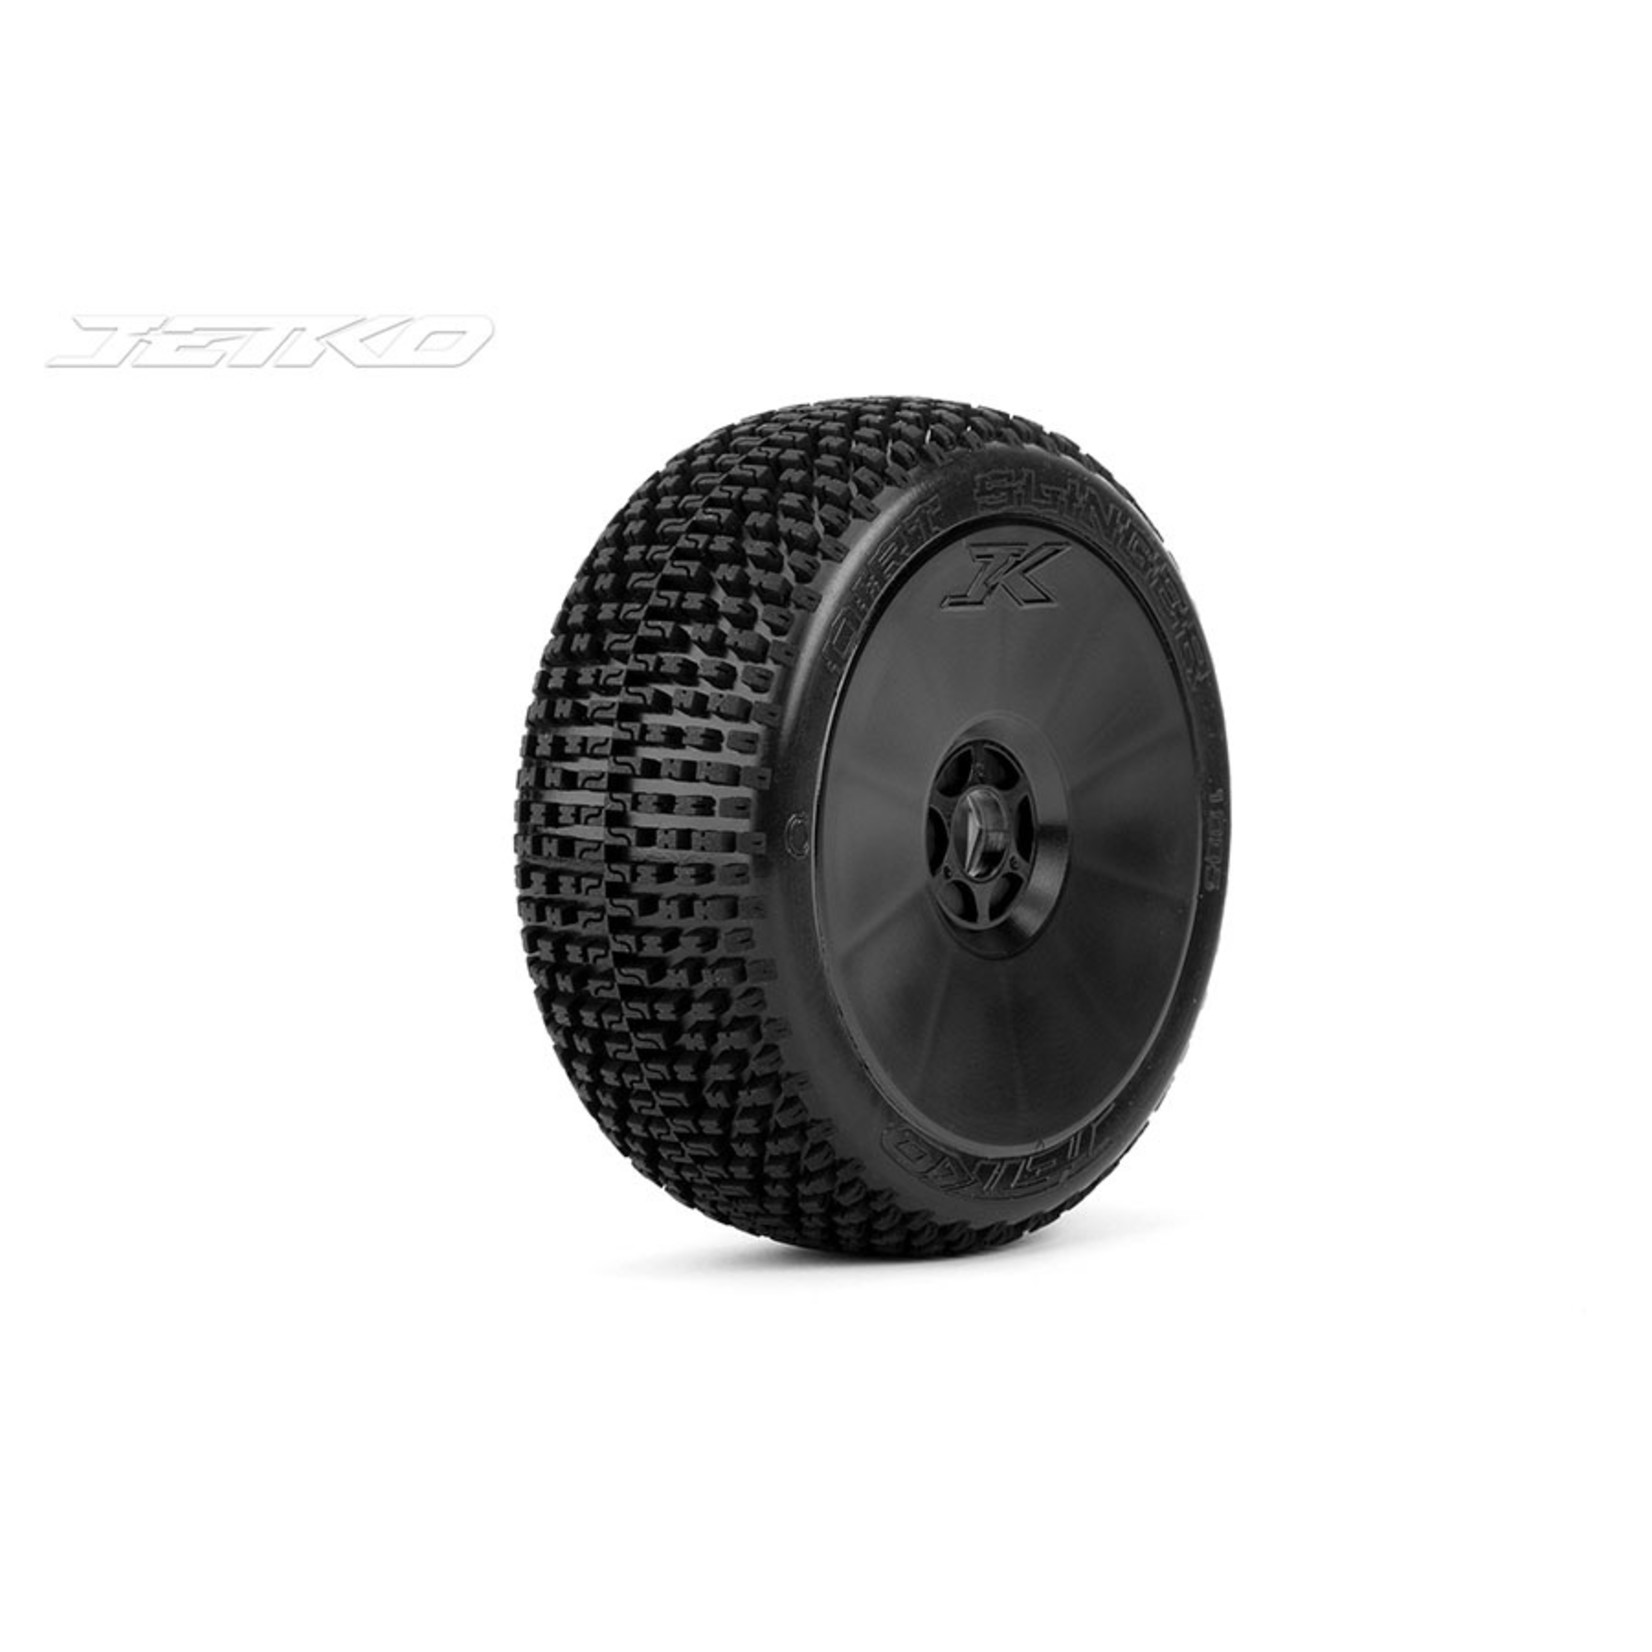 Jetko Tires Jetko Dirt Slinger 1/8 Buggy Pre-Mounted Tires on Black Dish Rims (Medium Soft) (2) #1005DBMSG